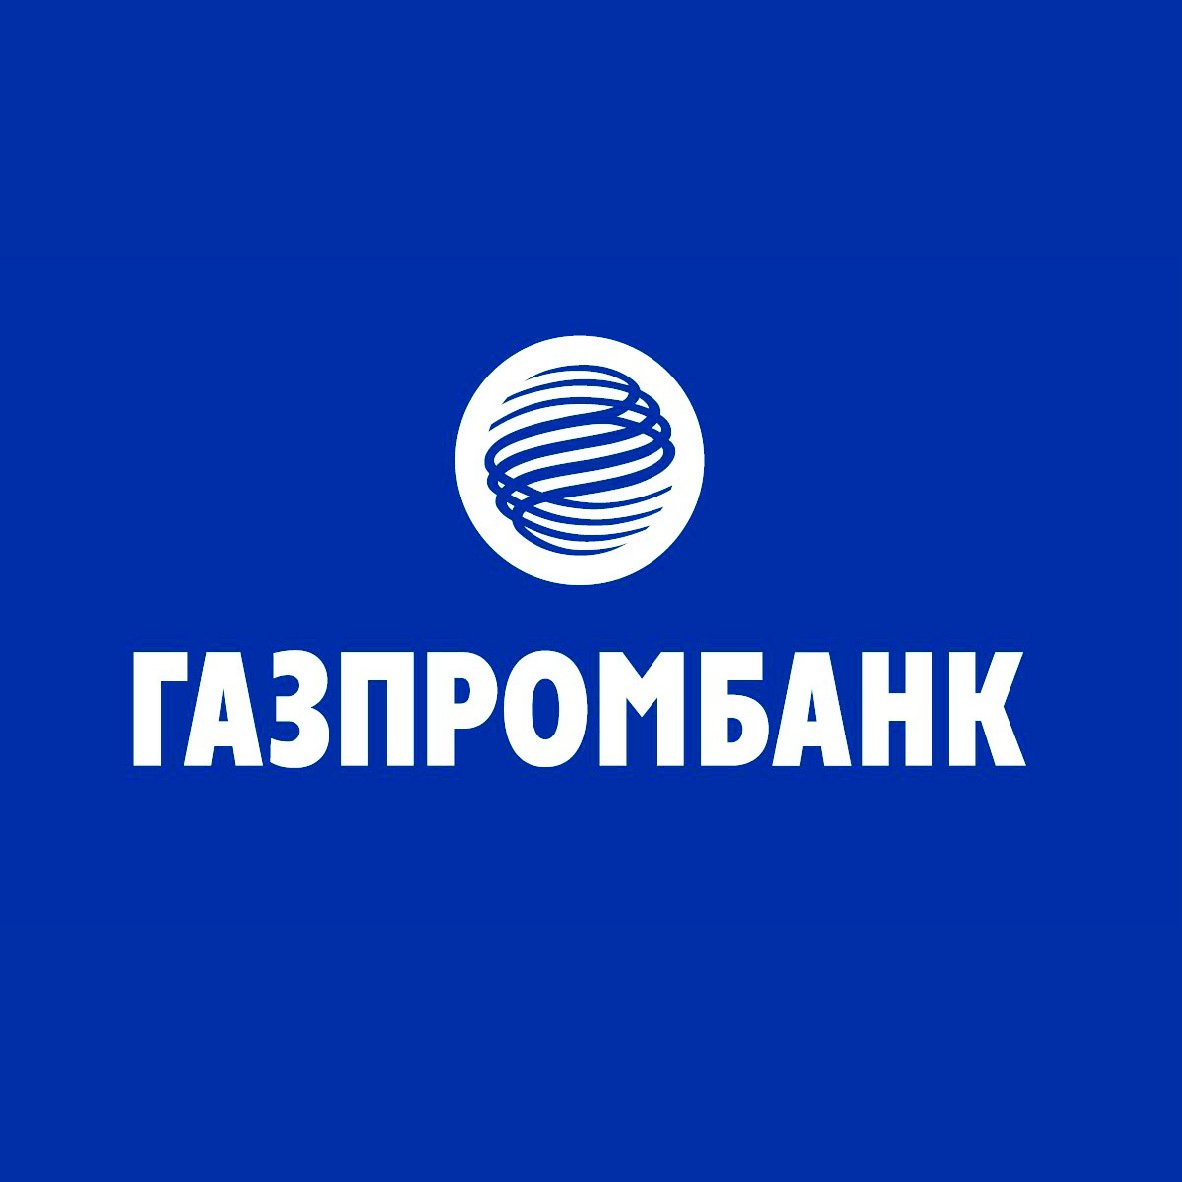 1636135140_1-papik-pro-p-gazprombank-logotip-foto-1